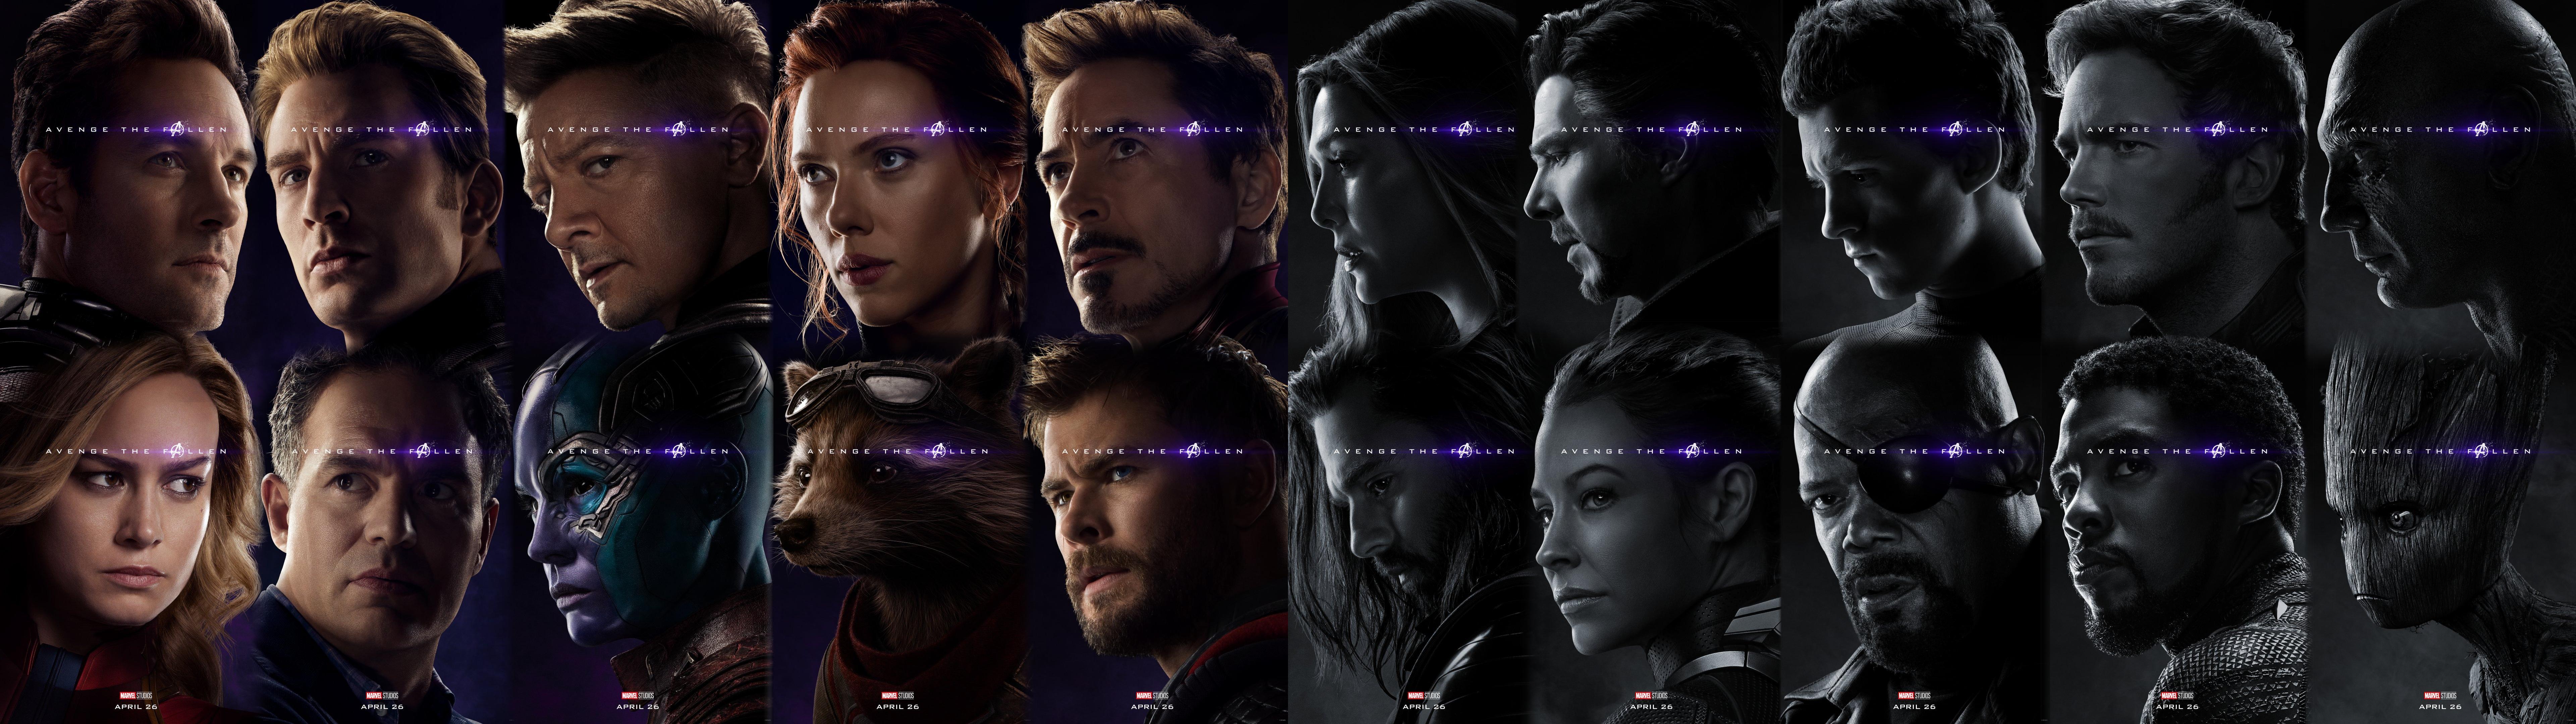 Avengers Dual Screen Wallpapers - Top Free Avengers Dual Screen